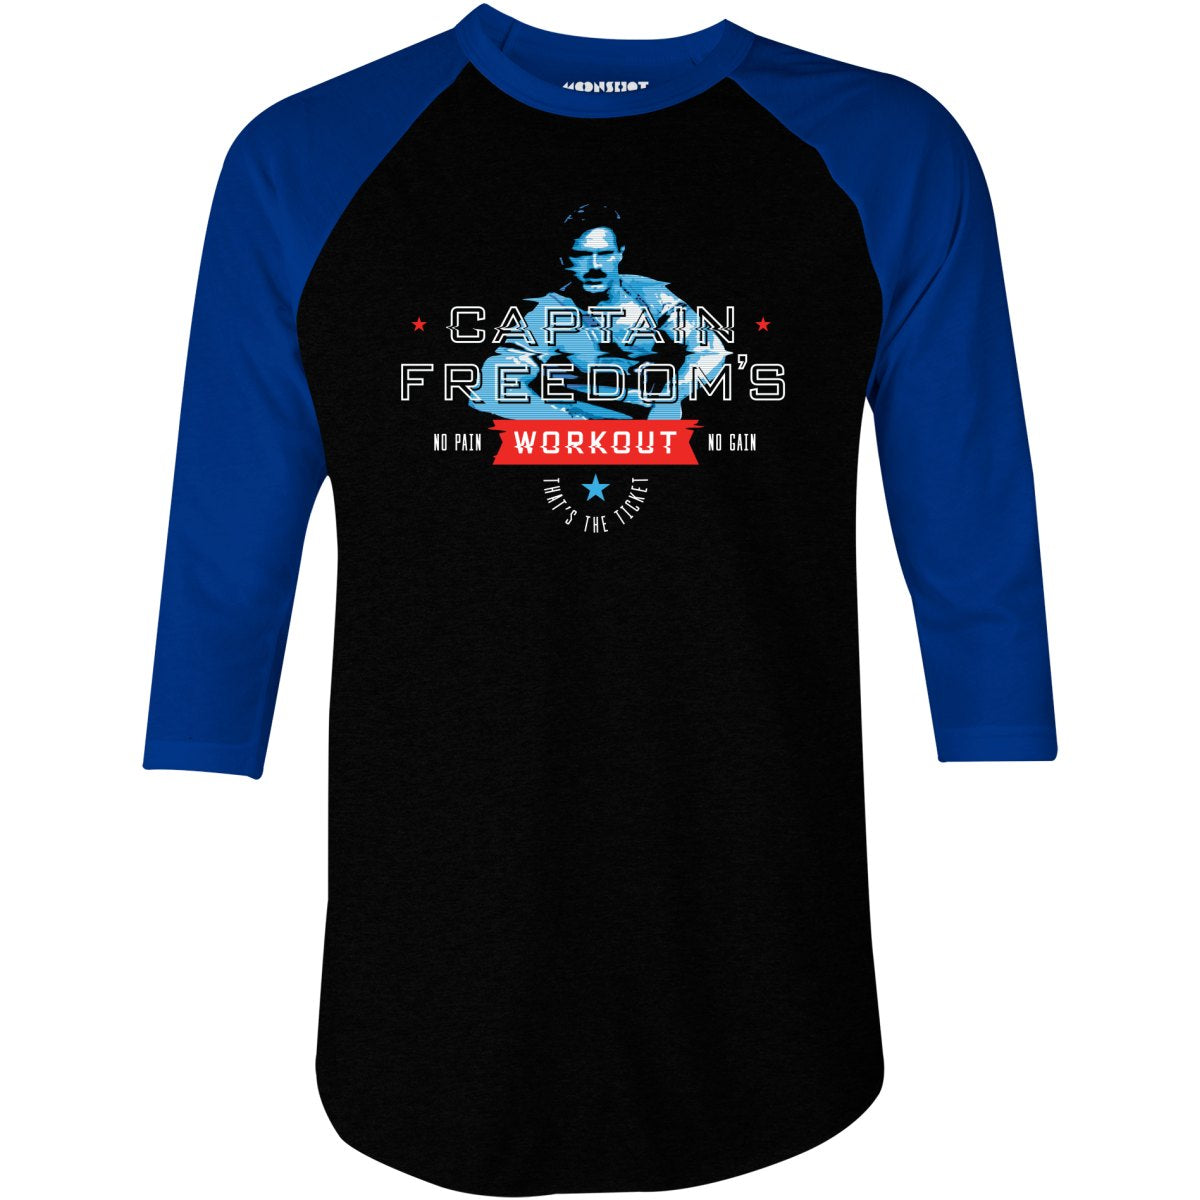 Running Man - Captain Freedom's Workout - 3/4 Sleeve Raglan T-Shirt